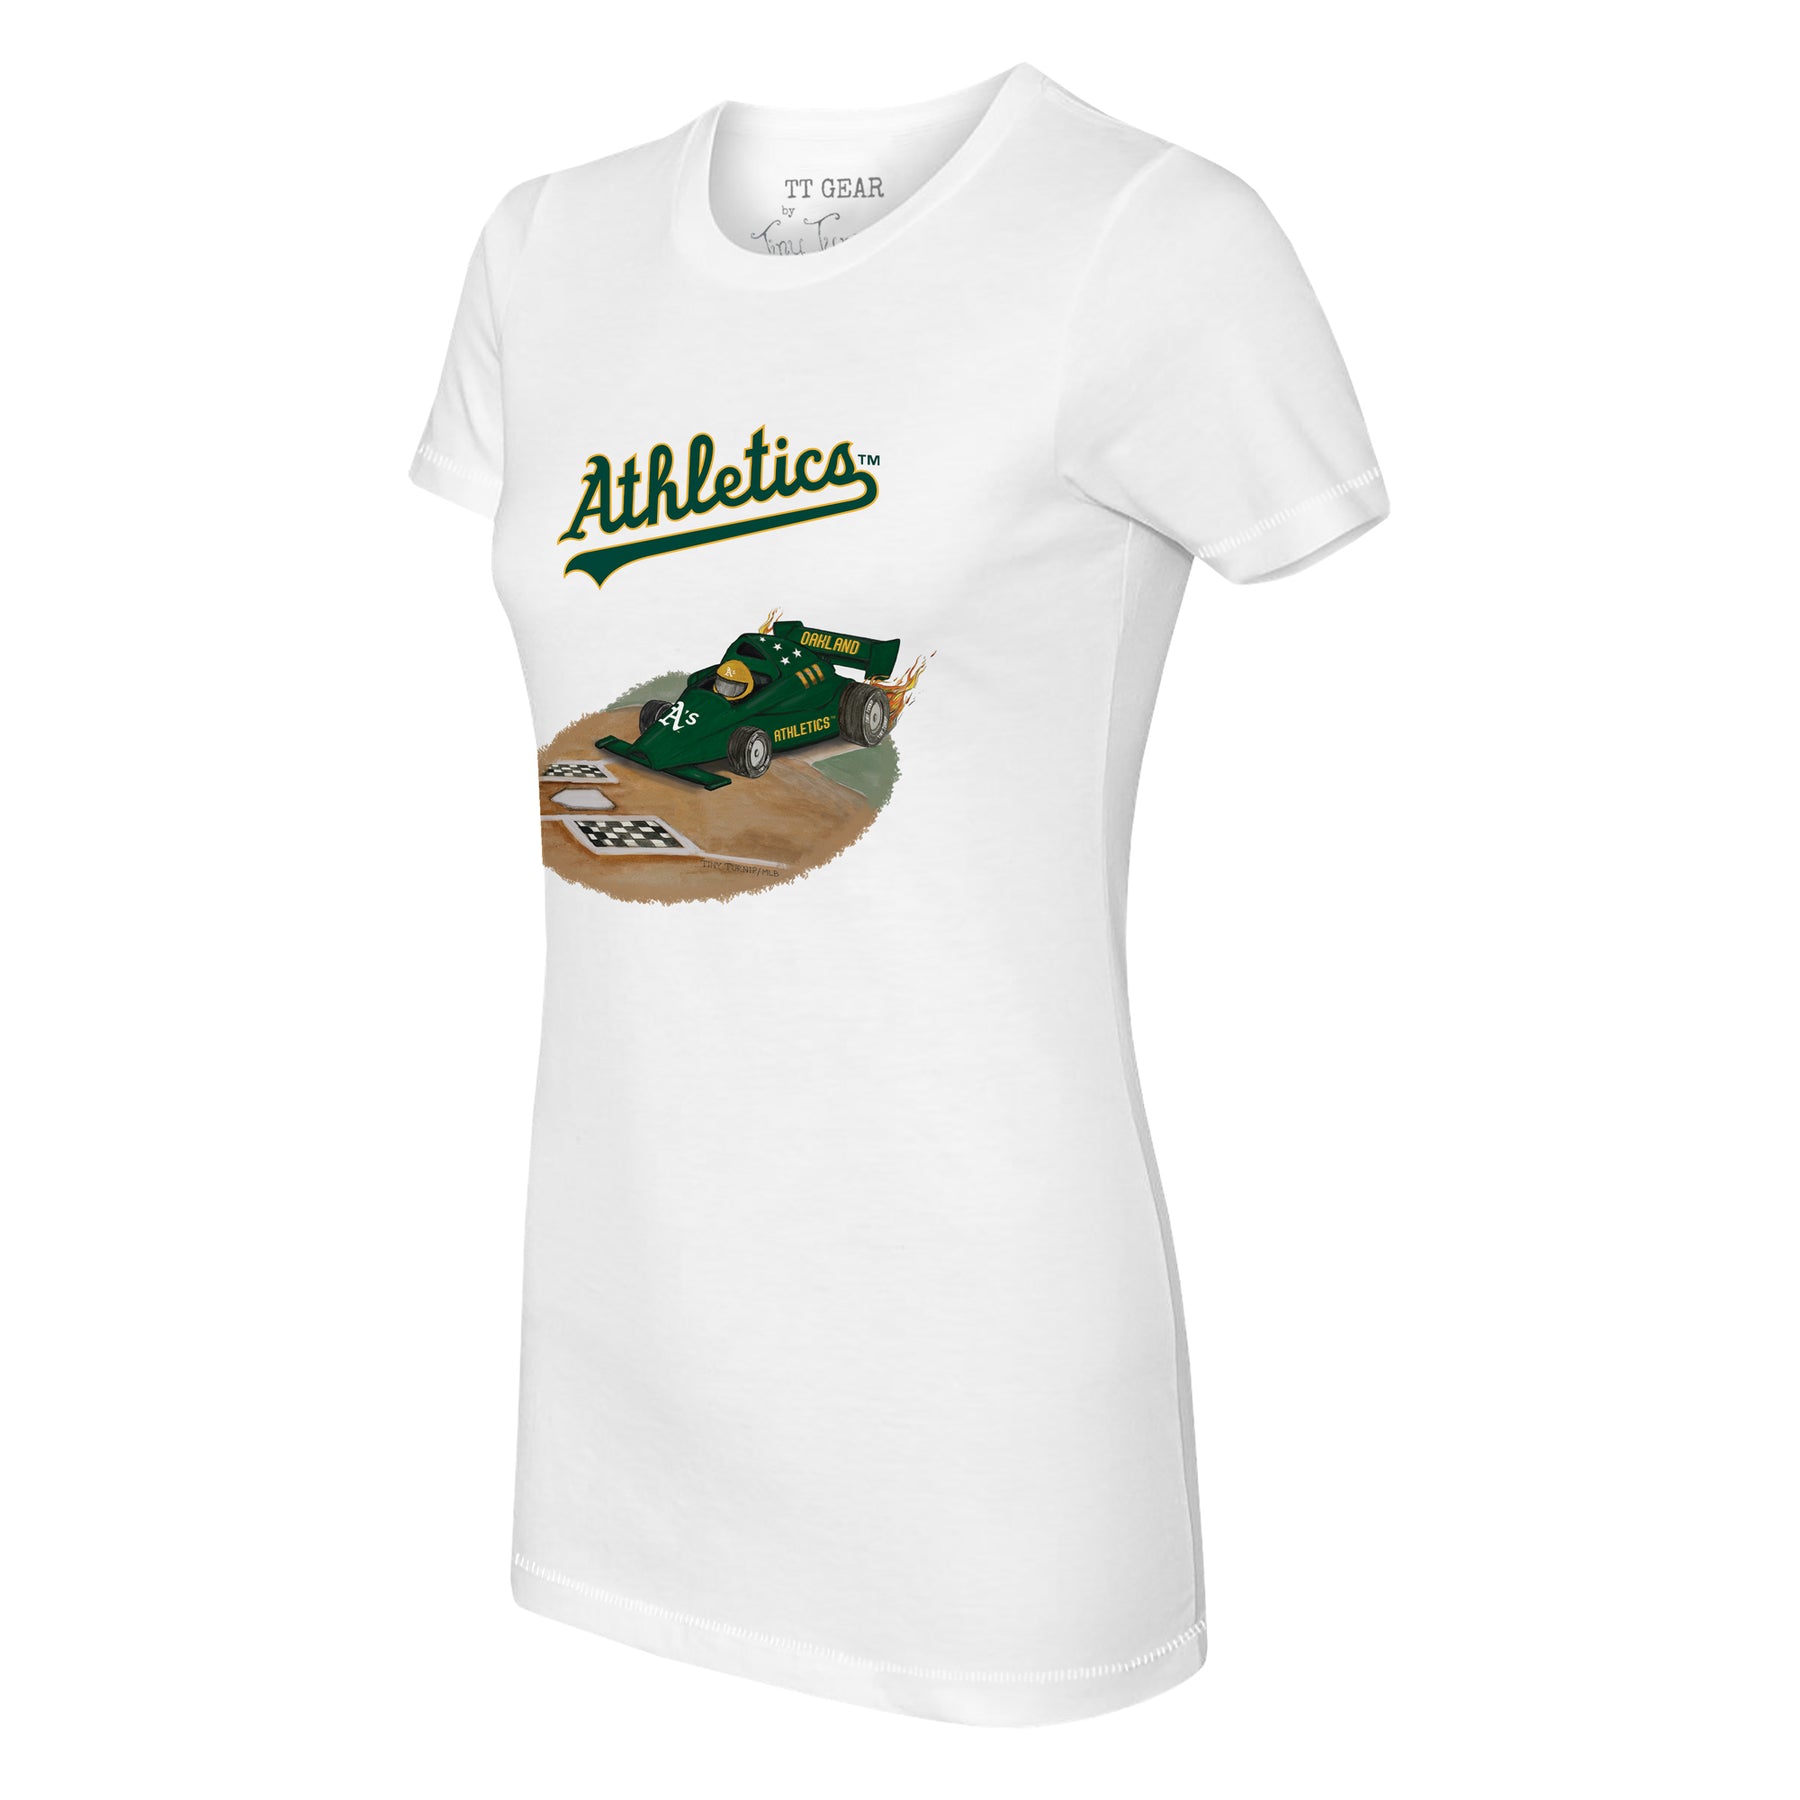 Oakland Athletics Race Car Tee Shirt